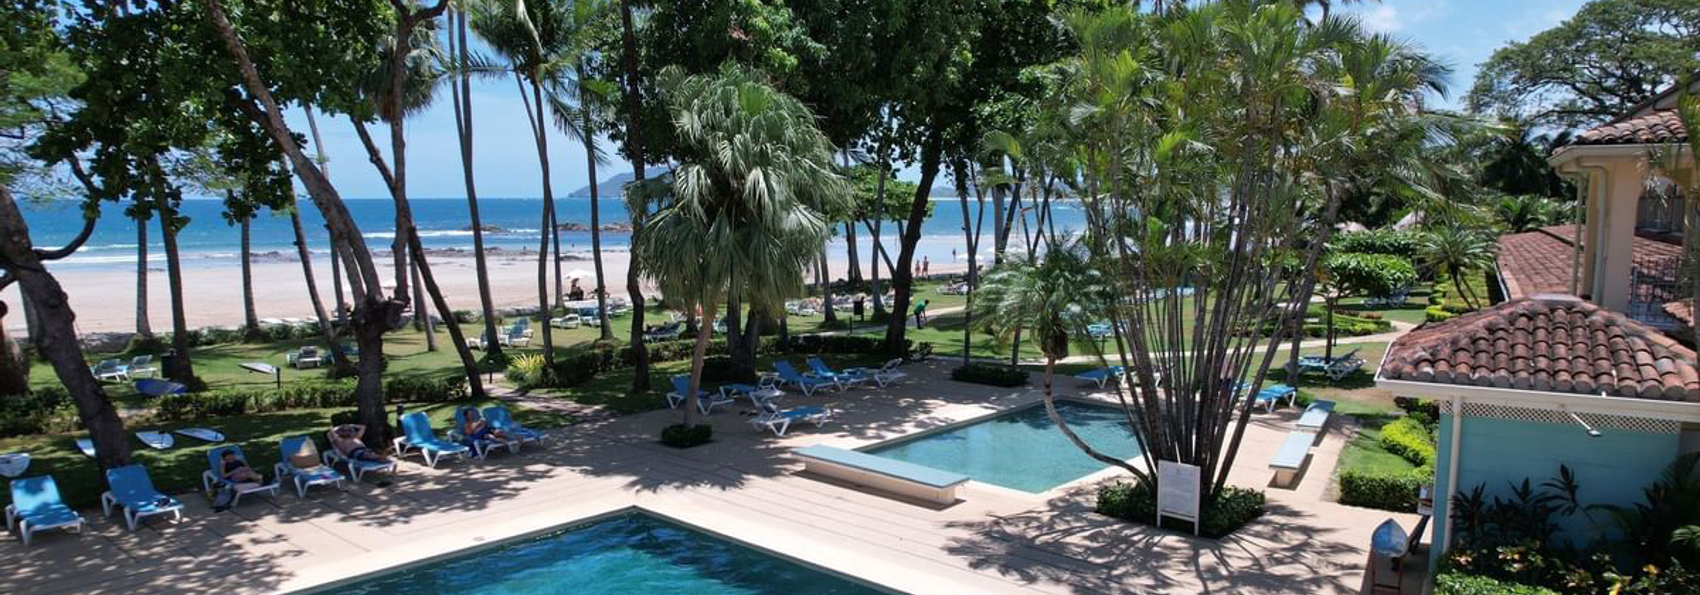 Tamarindo Diria Beach Resort Pool 02